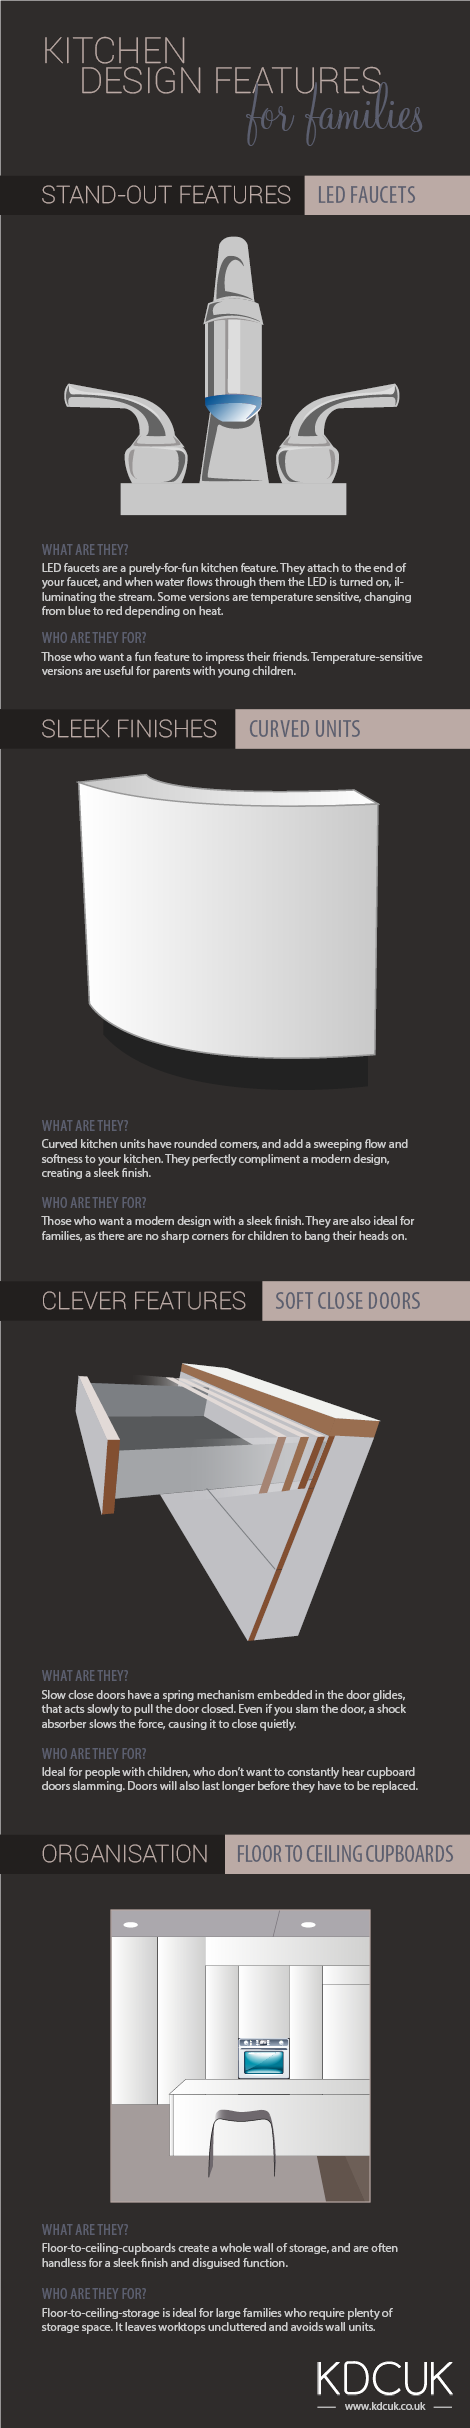 INFOGRAPHIC: Clever Kitchen Design Features- KDCUK Ltd